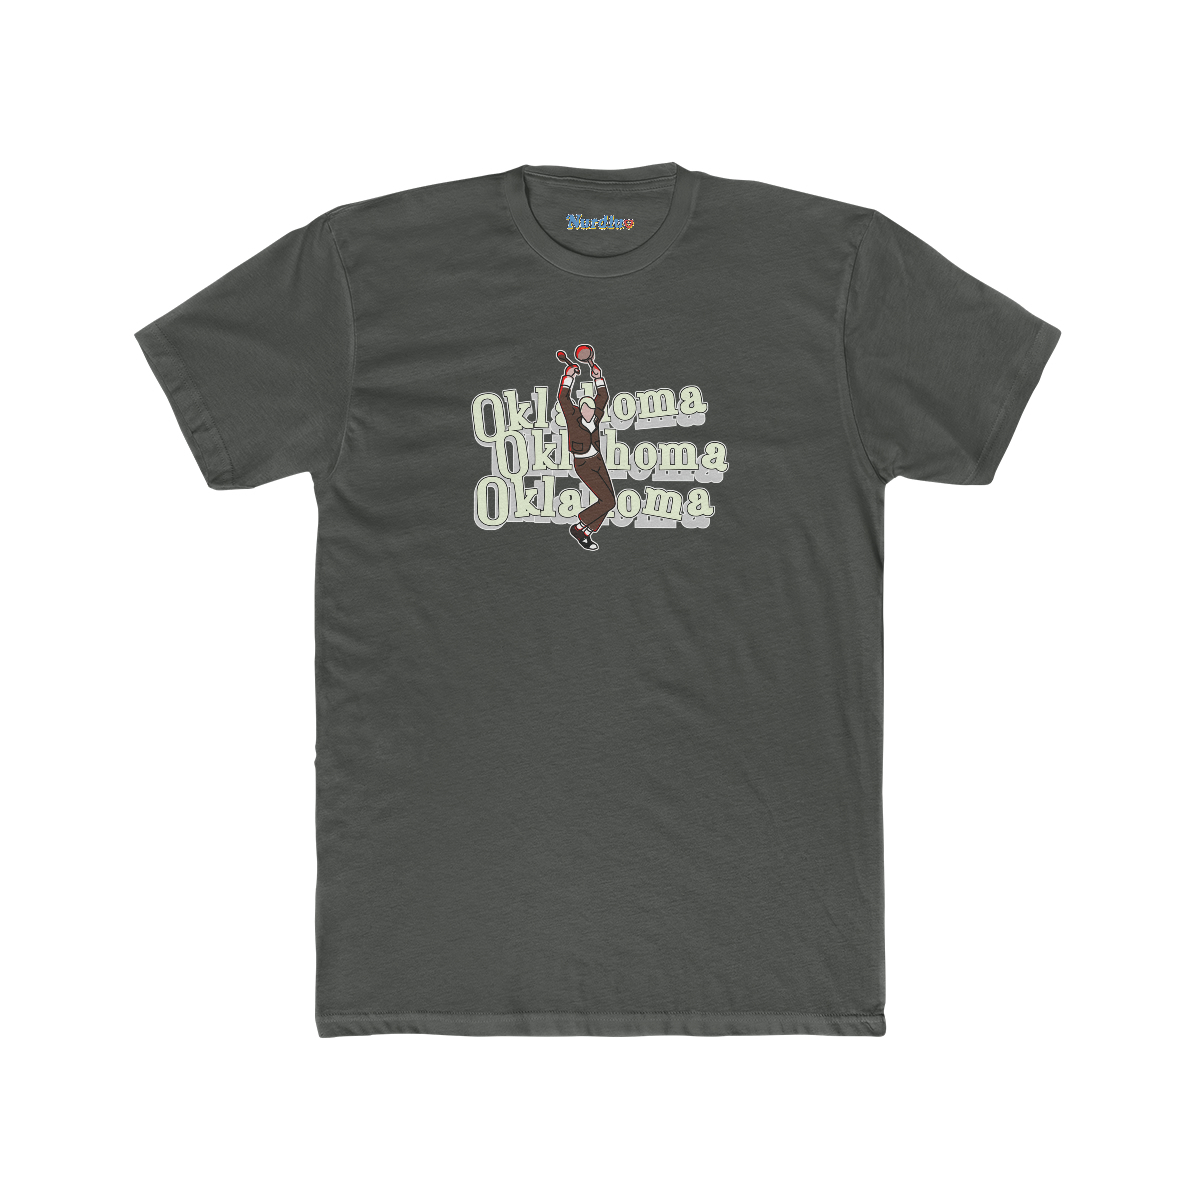 Oklahoma! (dark shirts) - Men's Cotton Crew Tee